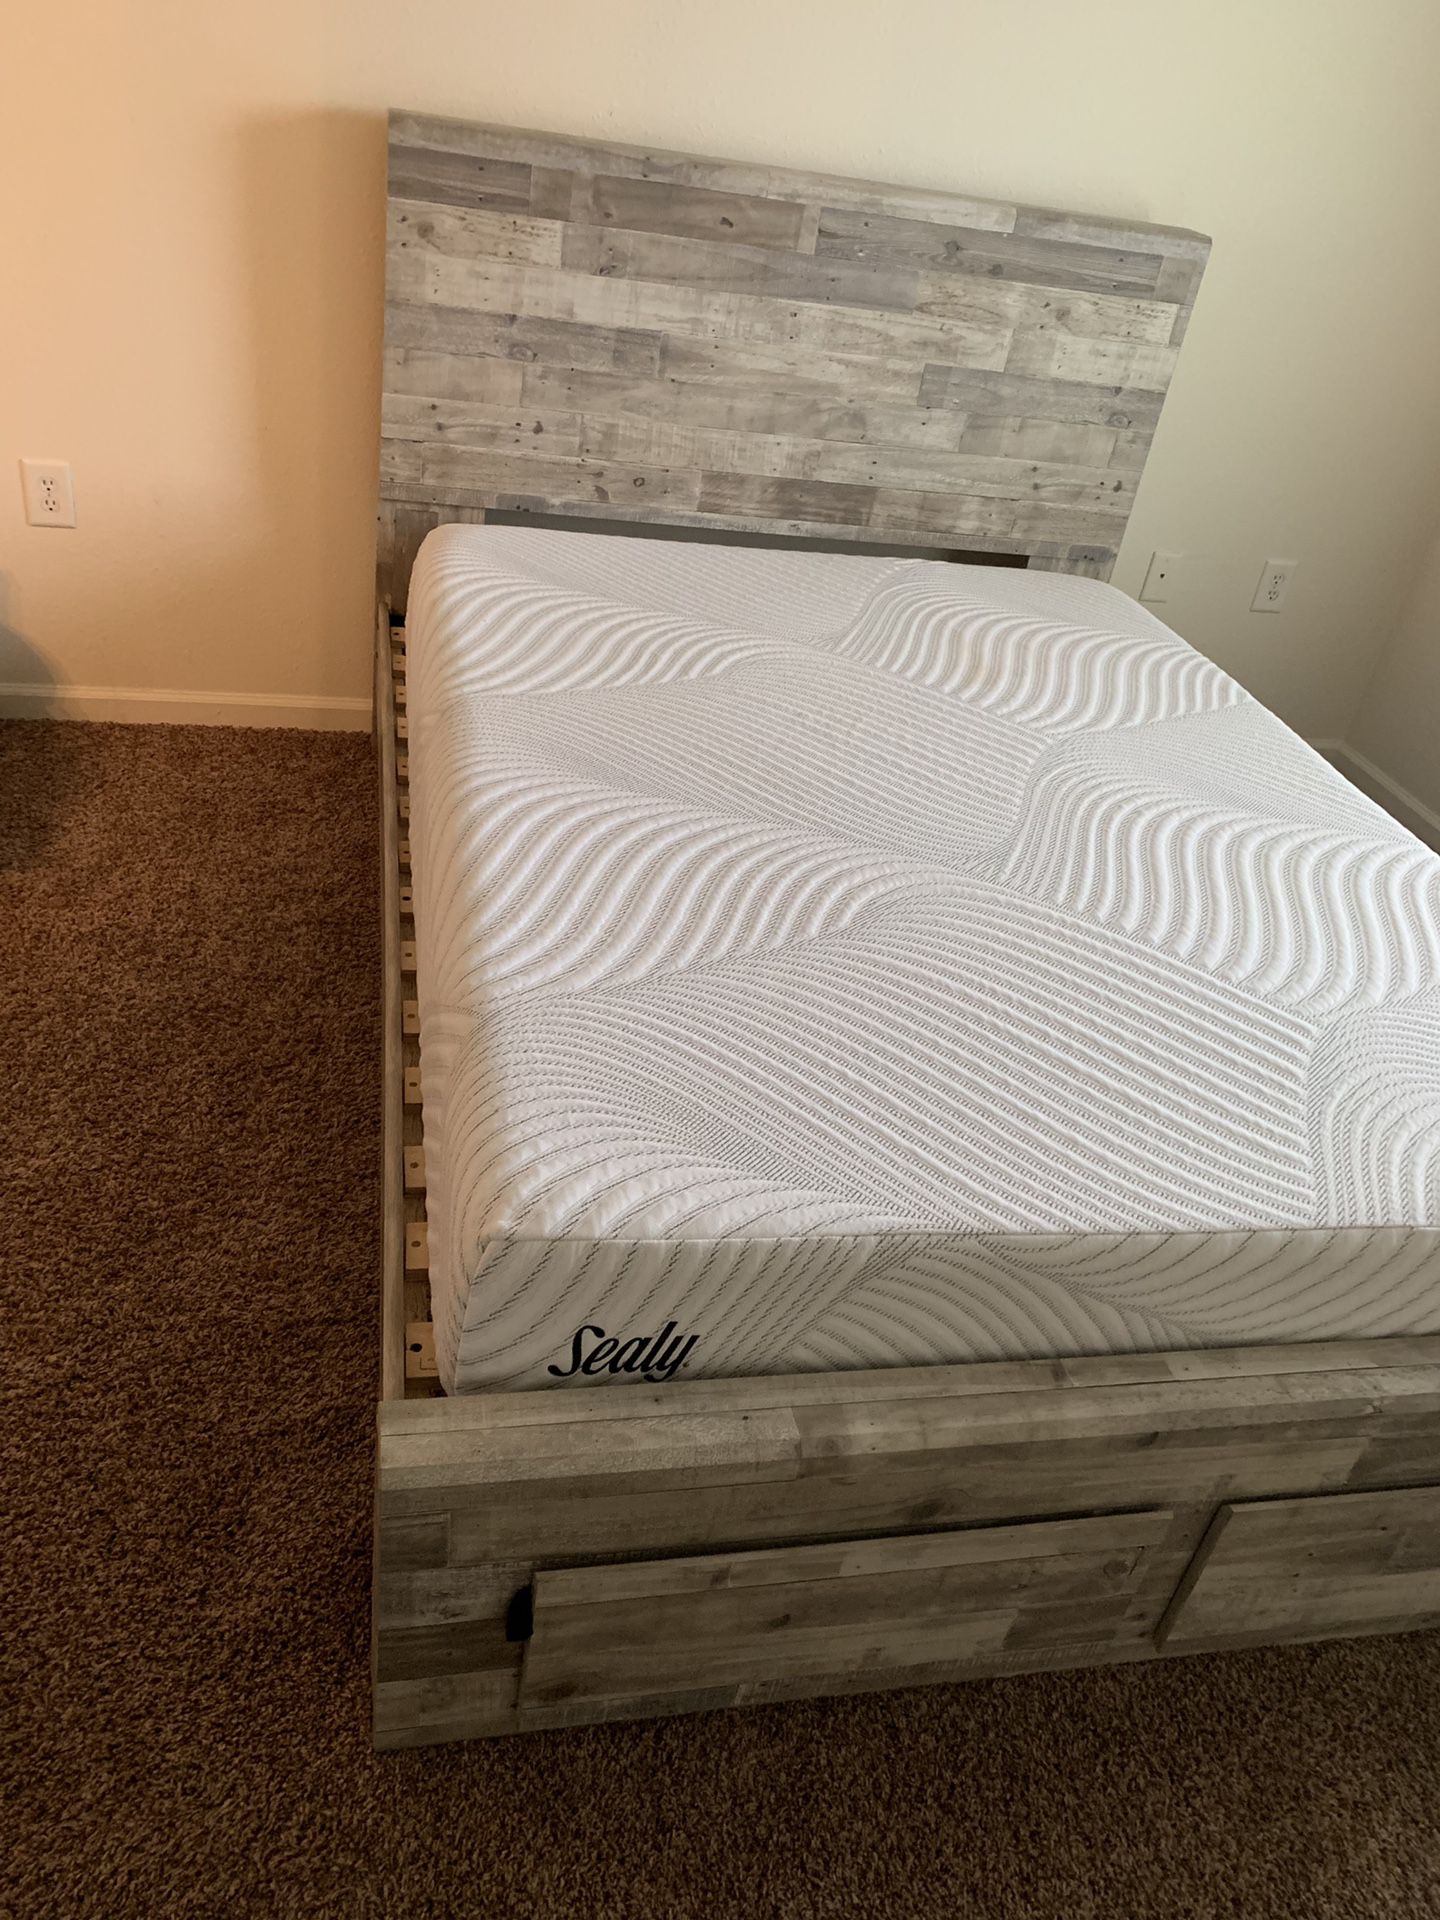 Queen bed mattress and frame